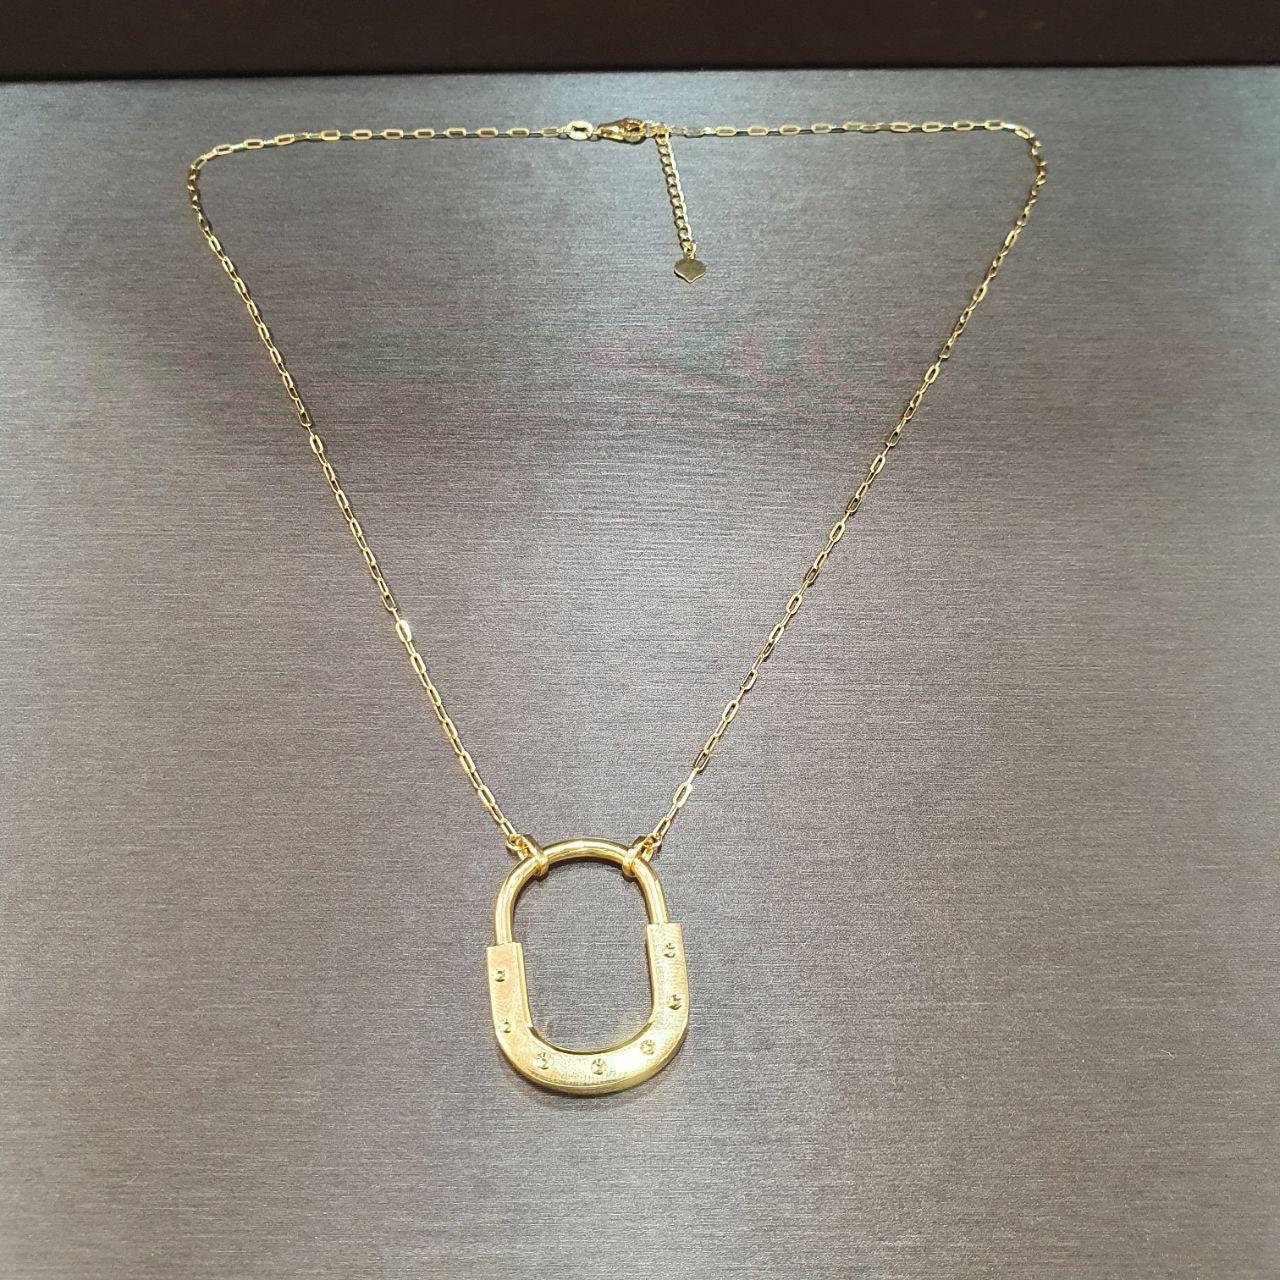 22k / 916 Gold T Design U Lock Necklace-Necklaces-Best Gold Shop